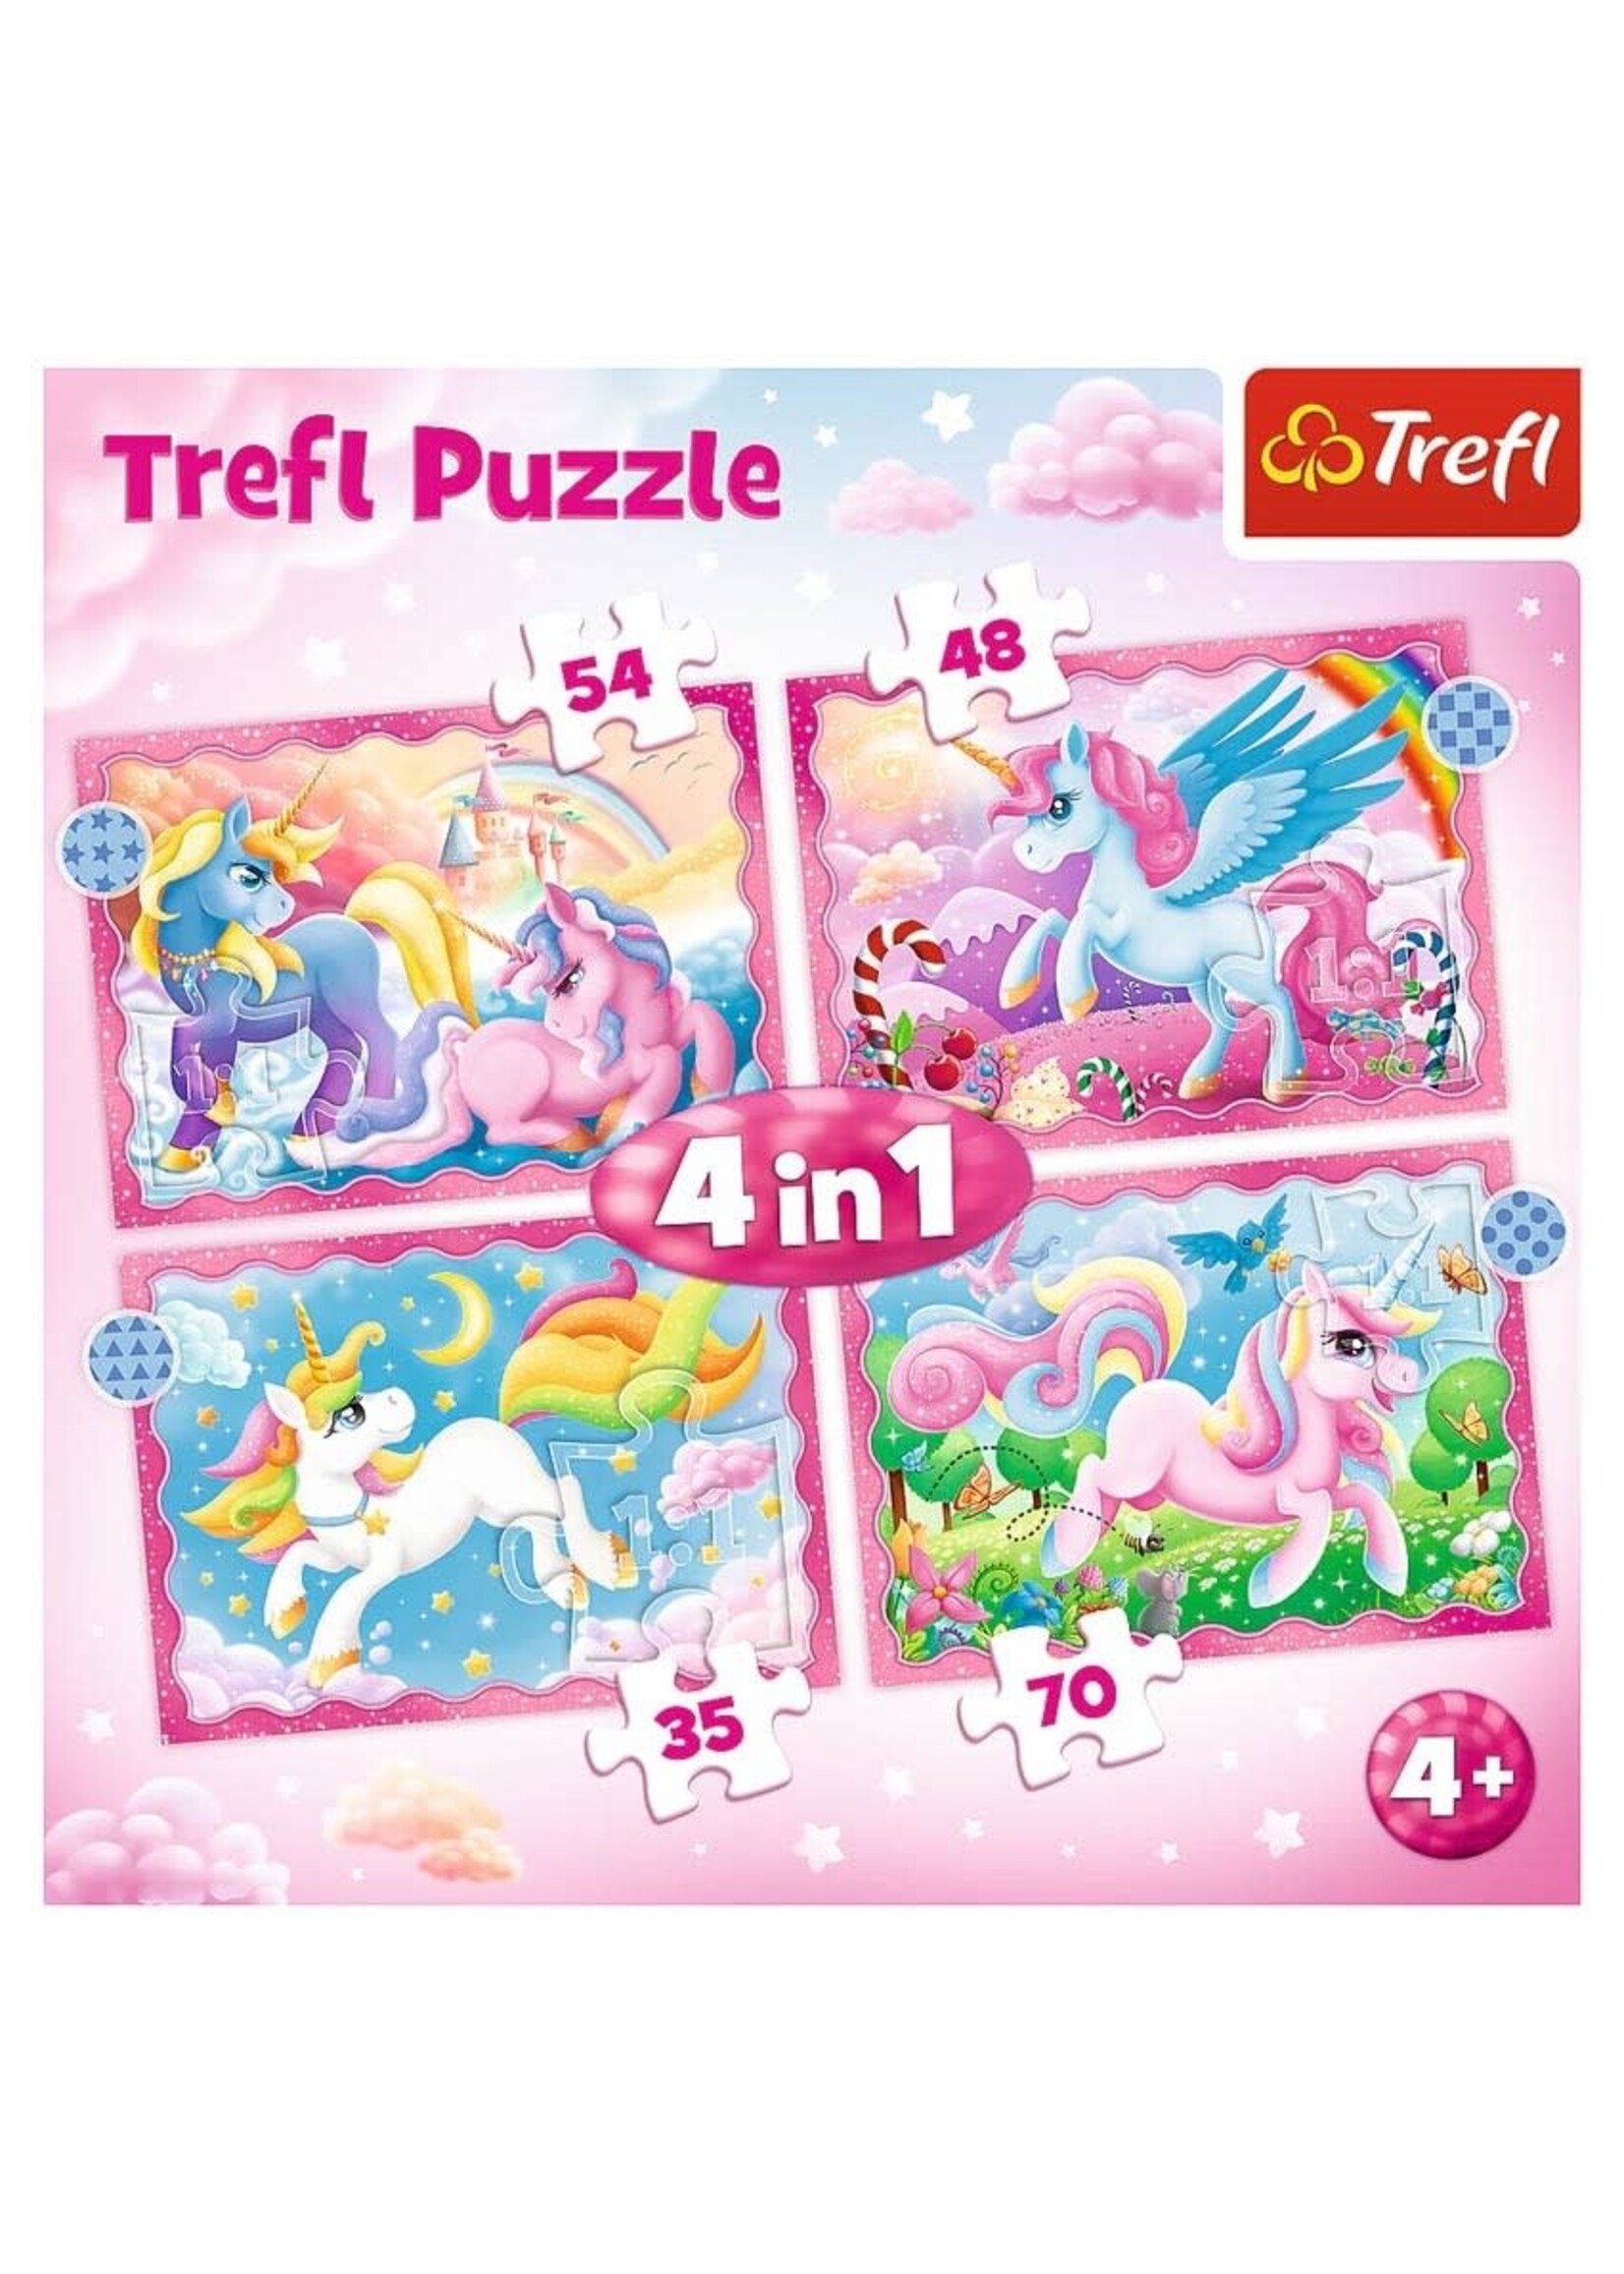 Trefl Puzzle: Unicorns and Magic 4in1